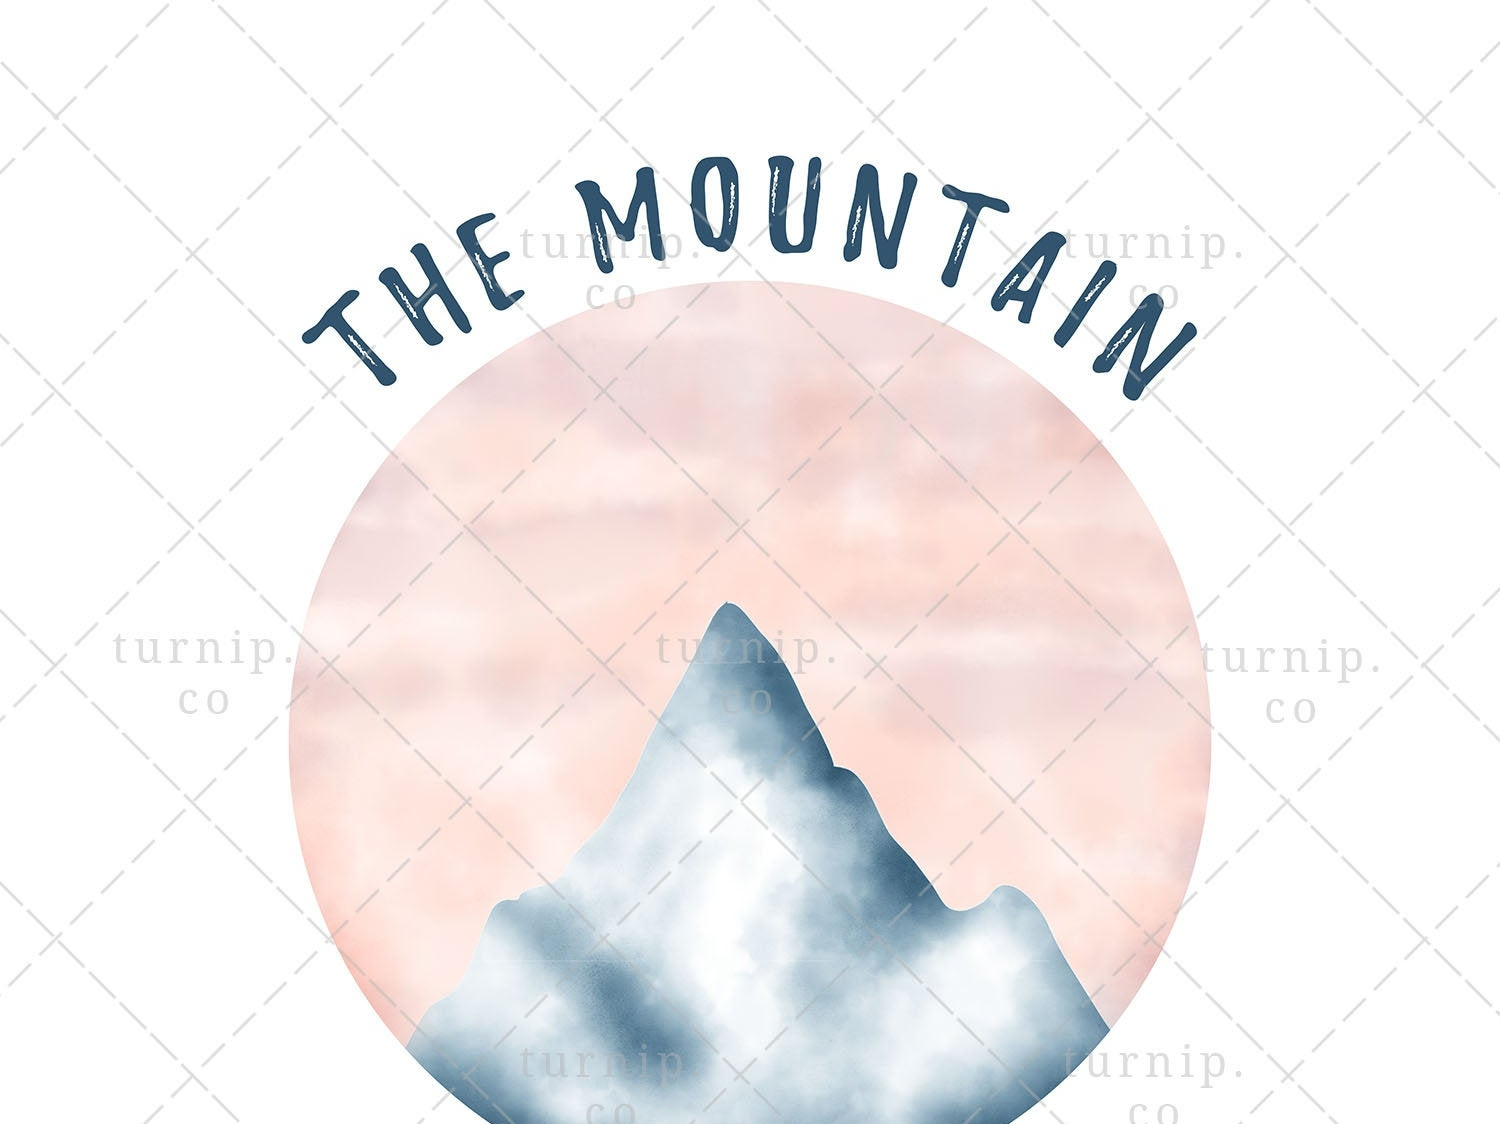 The mountain calling.